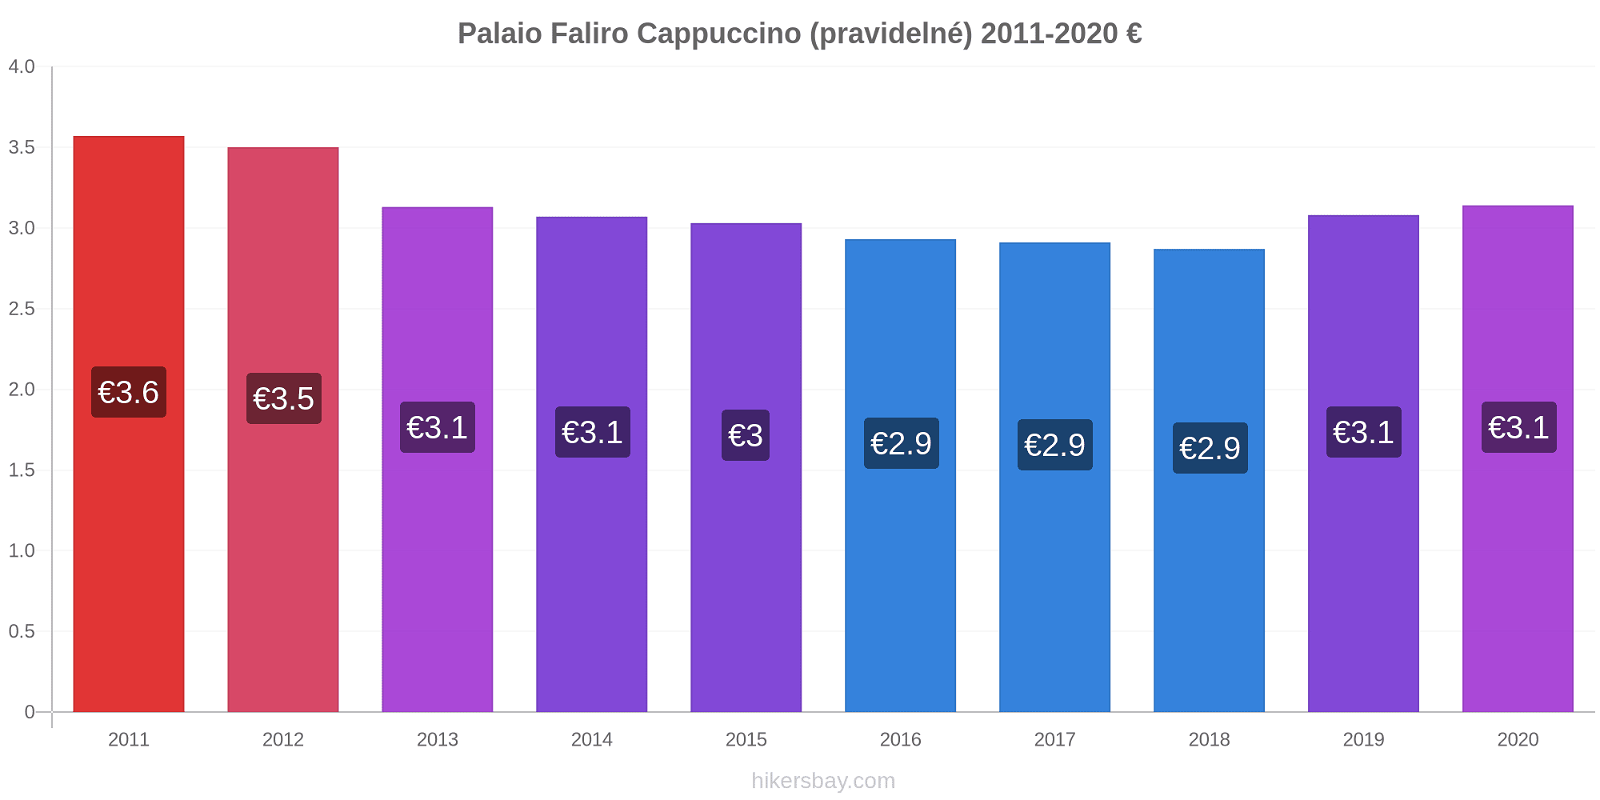 Palaio Faliro změny cen Cappuccino (pravidelné) hikersbay.com